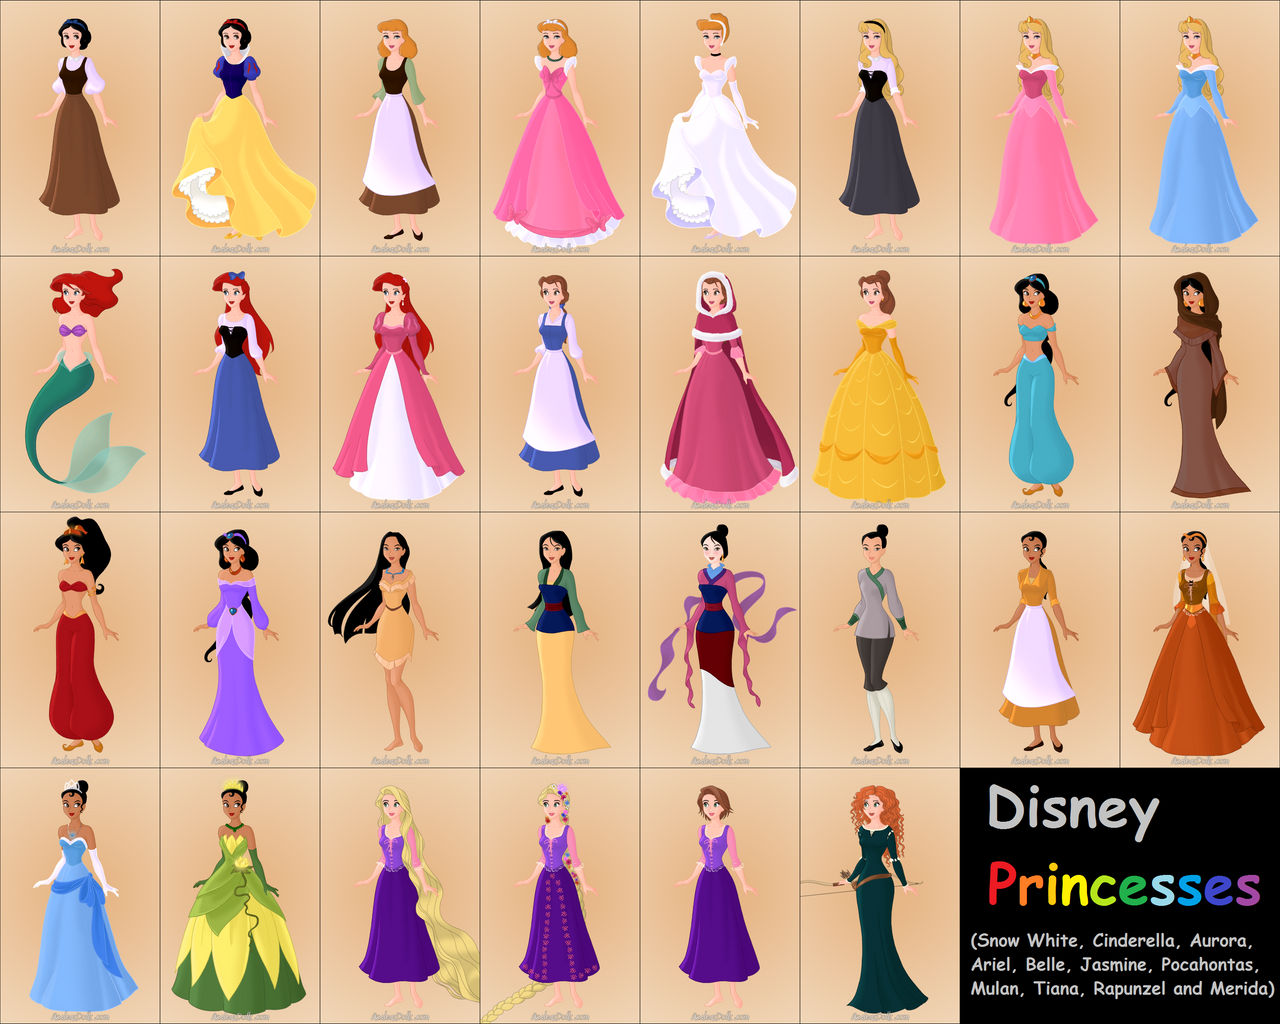 Disney Princesses (1937 - 2012) by Lady66647 on DeviantArt